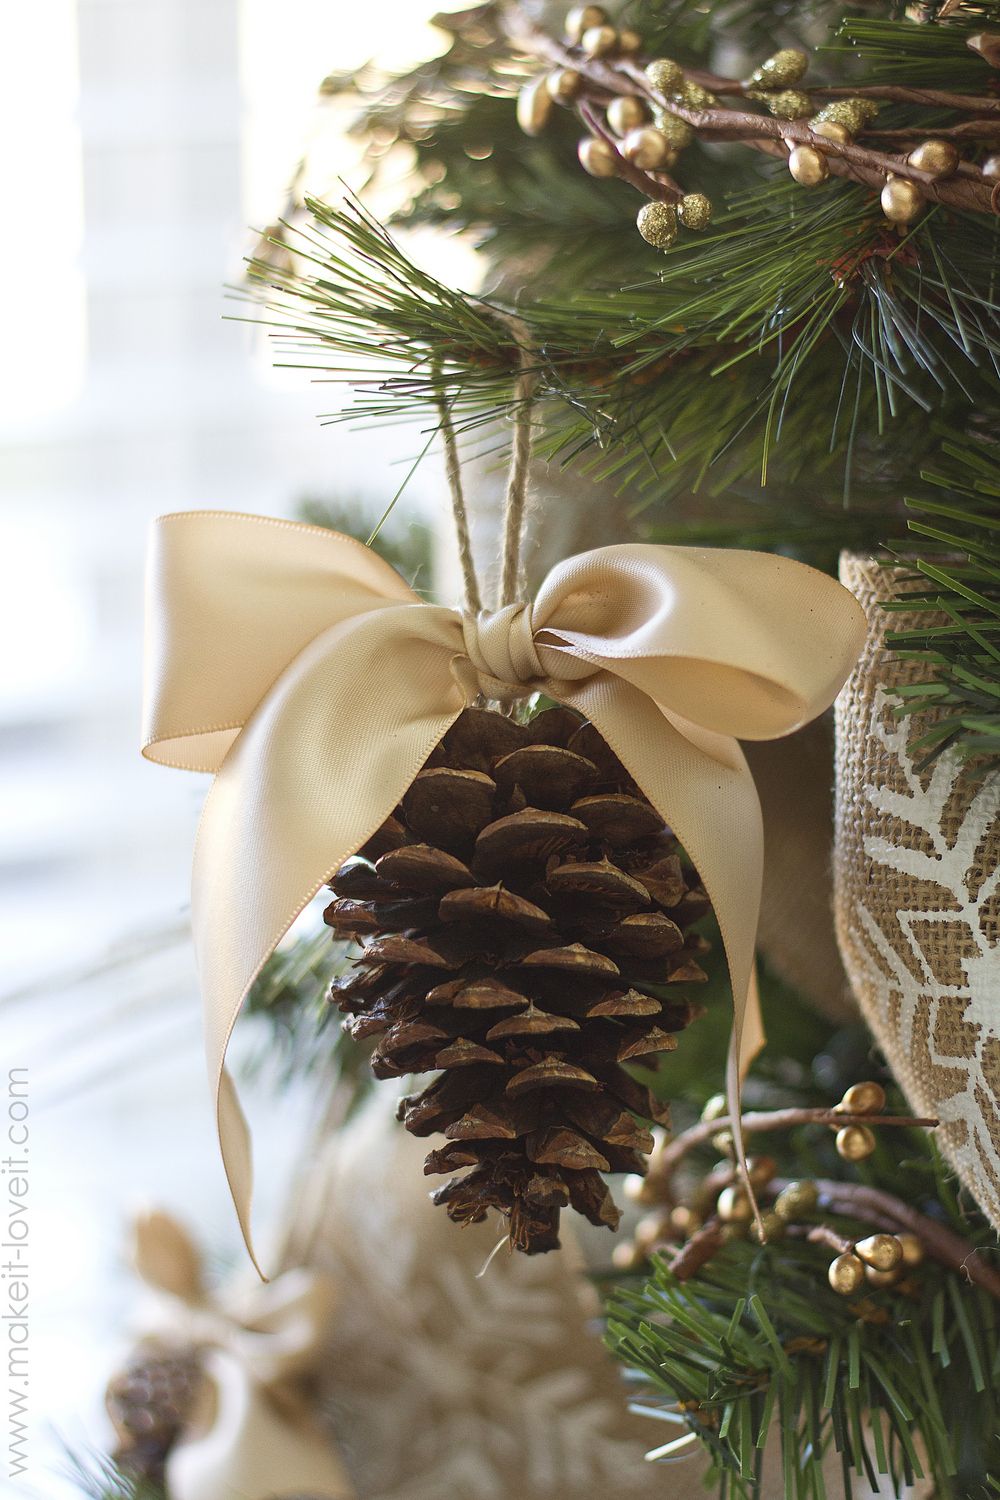 Pine Cone Ornaments - Pine Cone Holiday DIYs